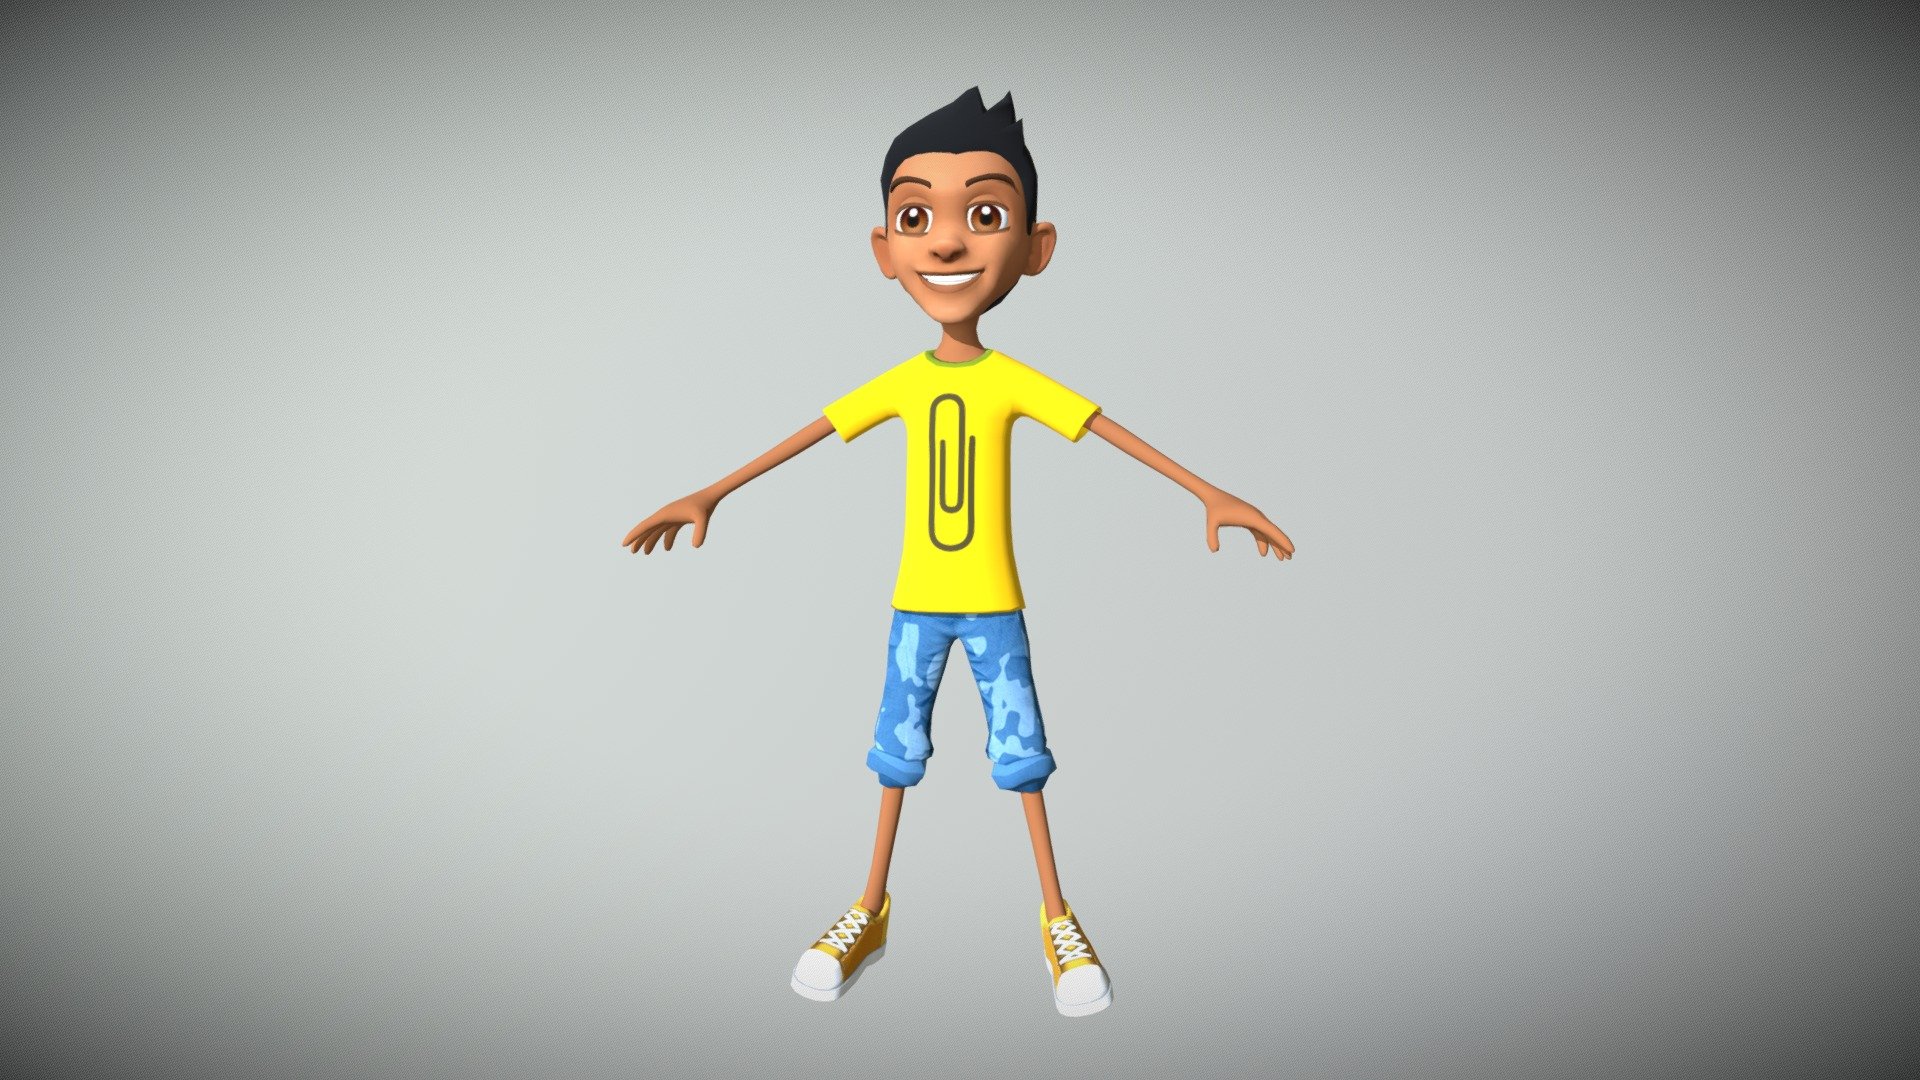 Zbrush, Topogun, Photoshop - Character Raul - Kickerinho World - 3D model by patatajec 3d model